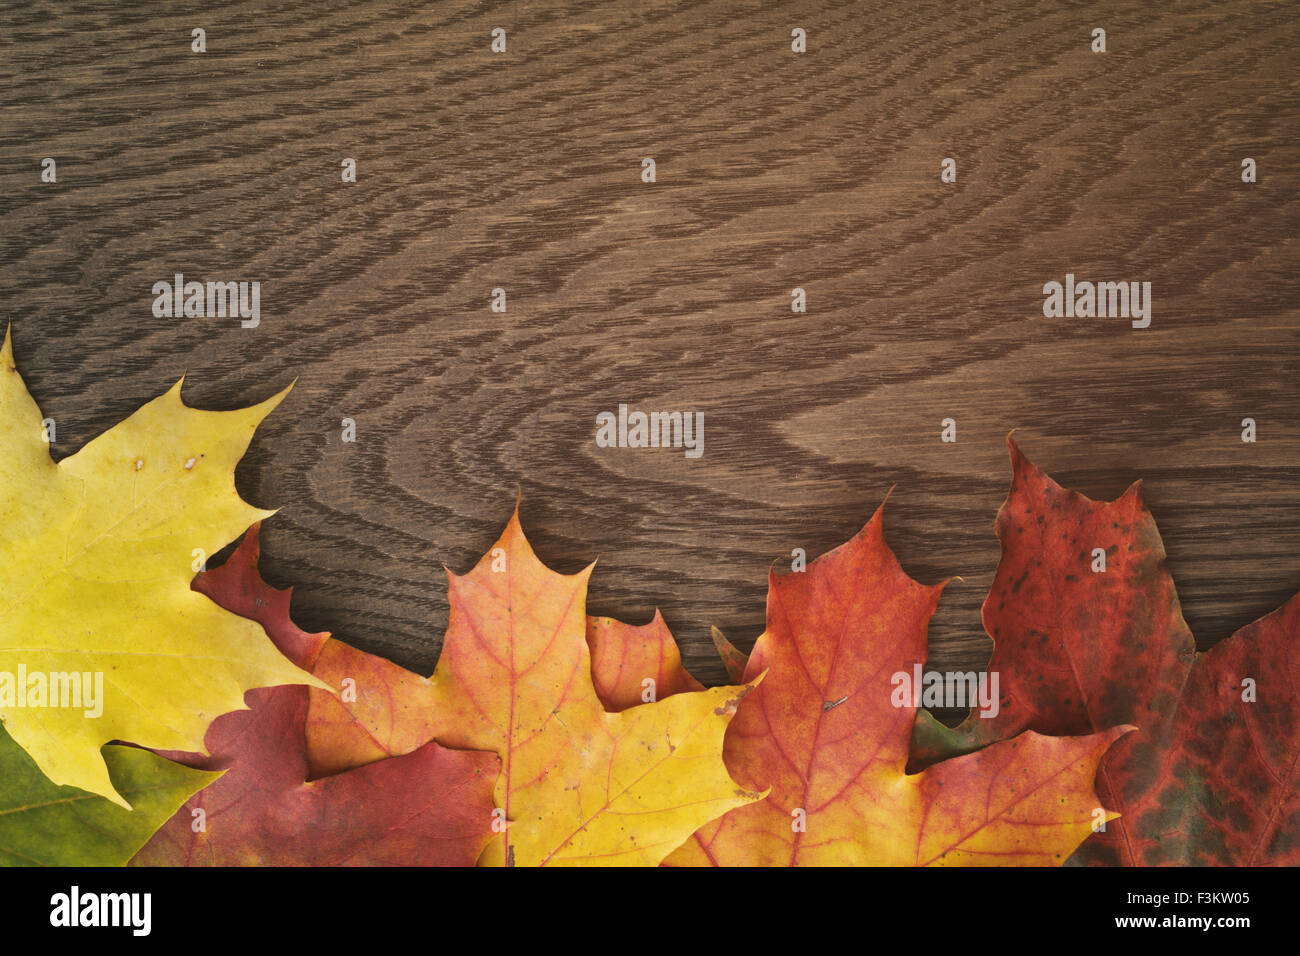 autumn maple leaves on wood table Stock Photo